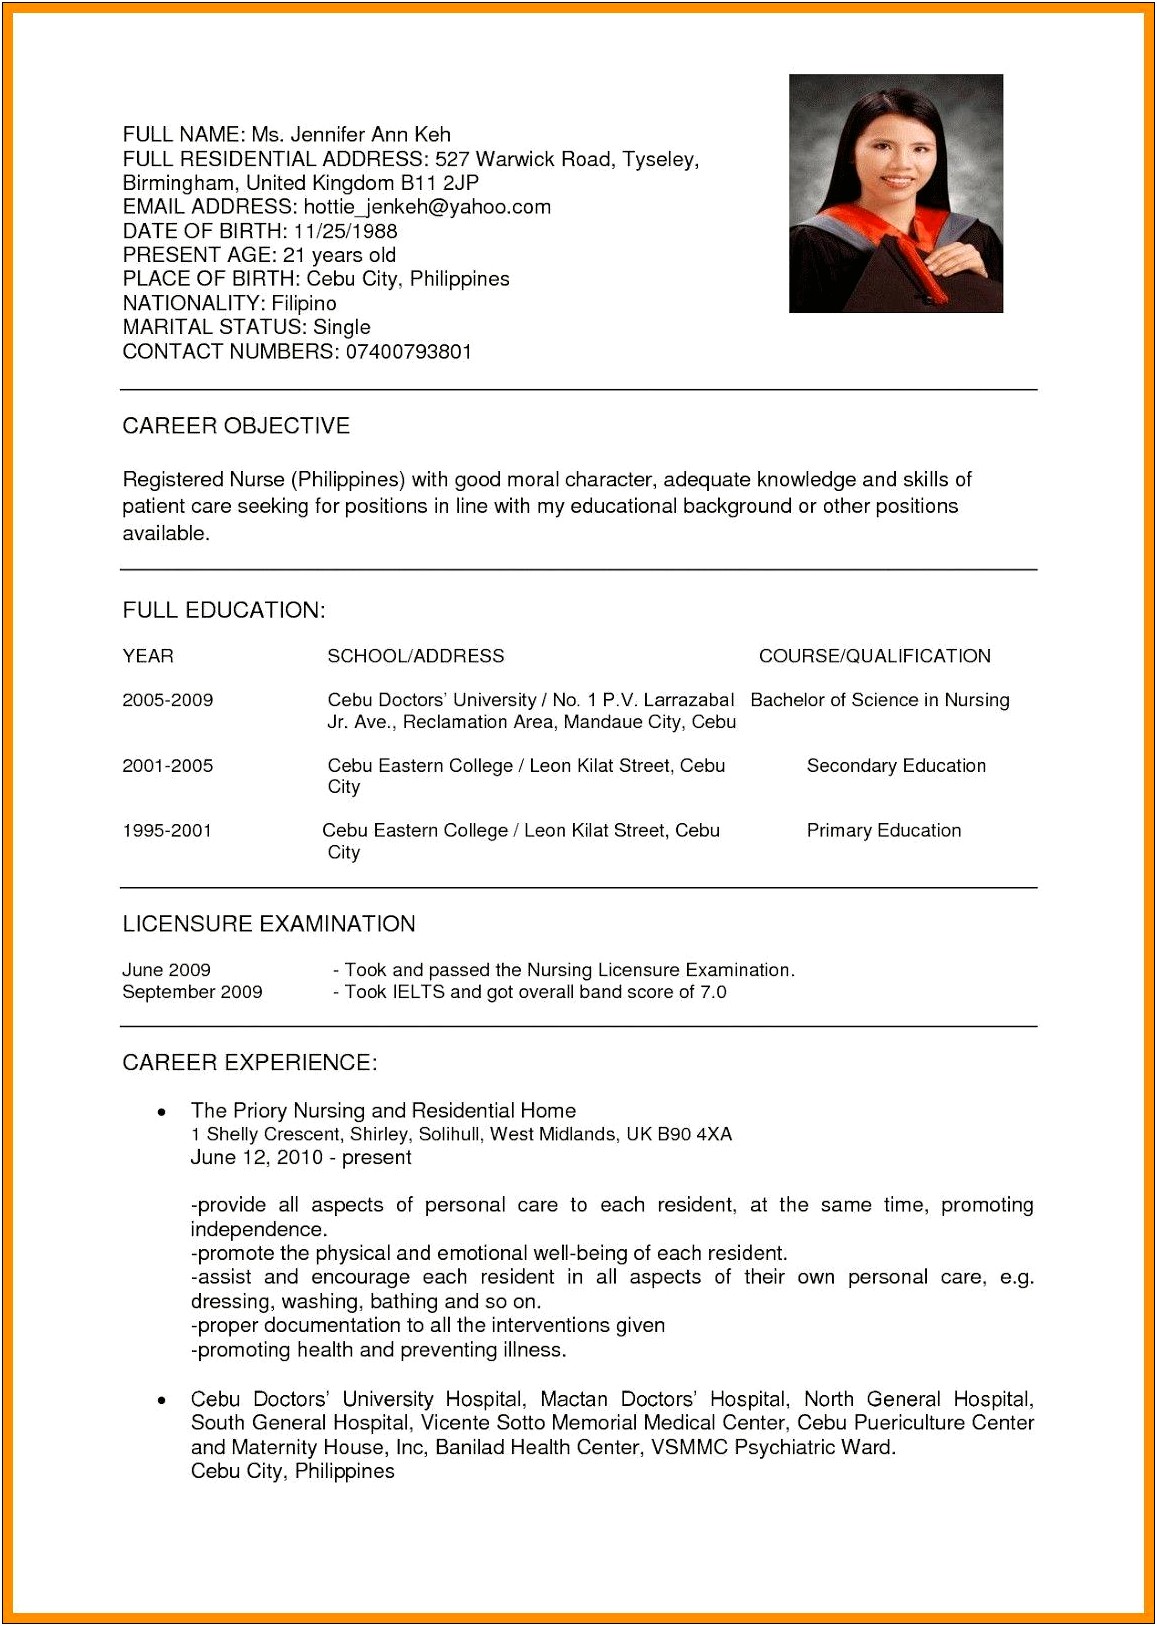 resume format pdf philippines